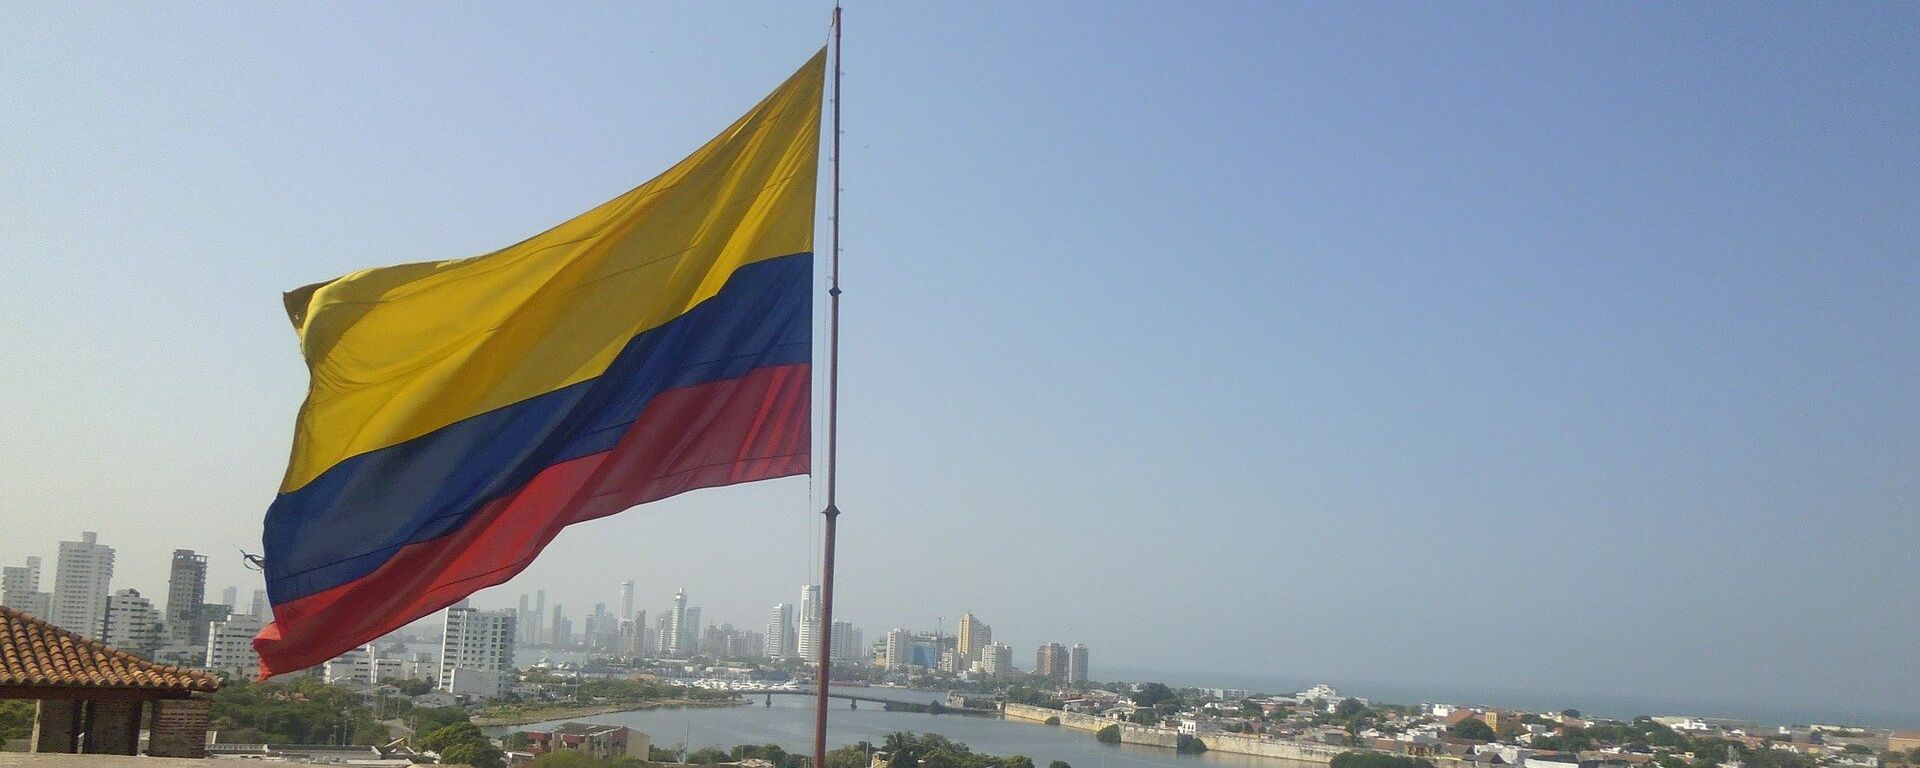 Bandera de Colombia - Sputnik Mundo, 1920, 25.10.2021